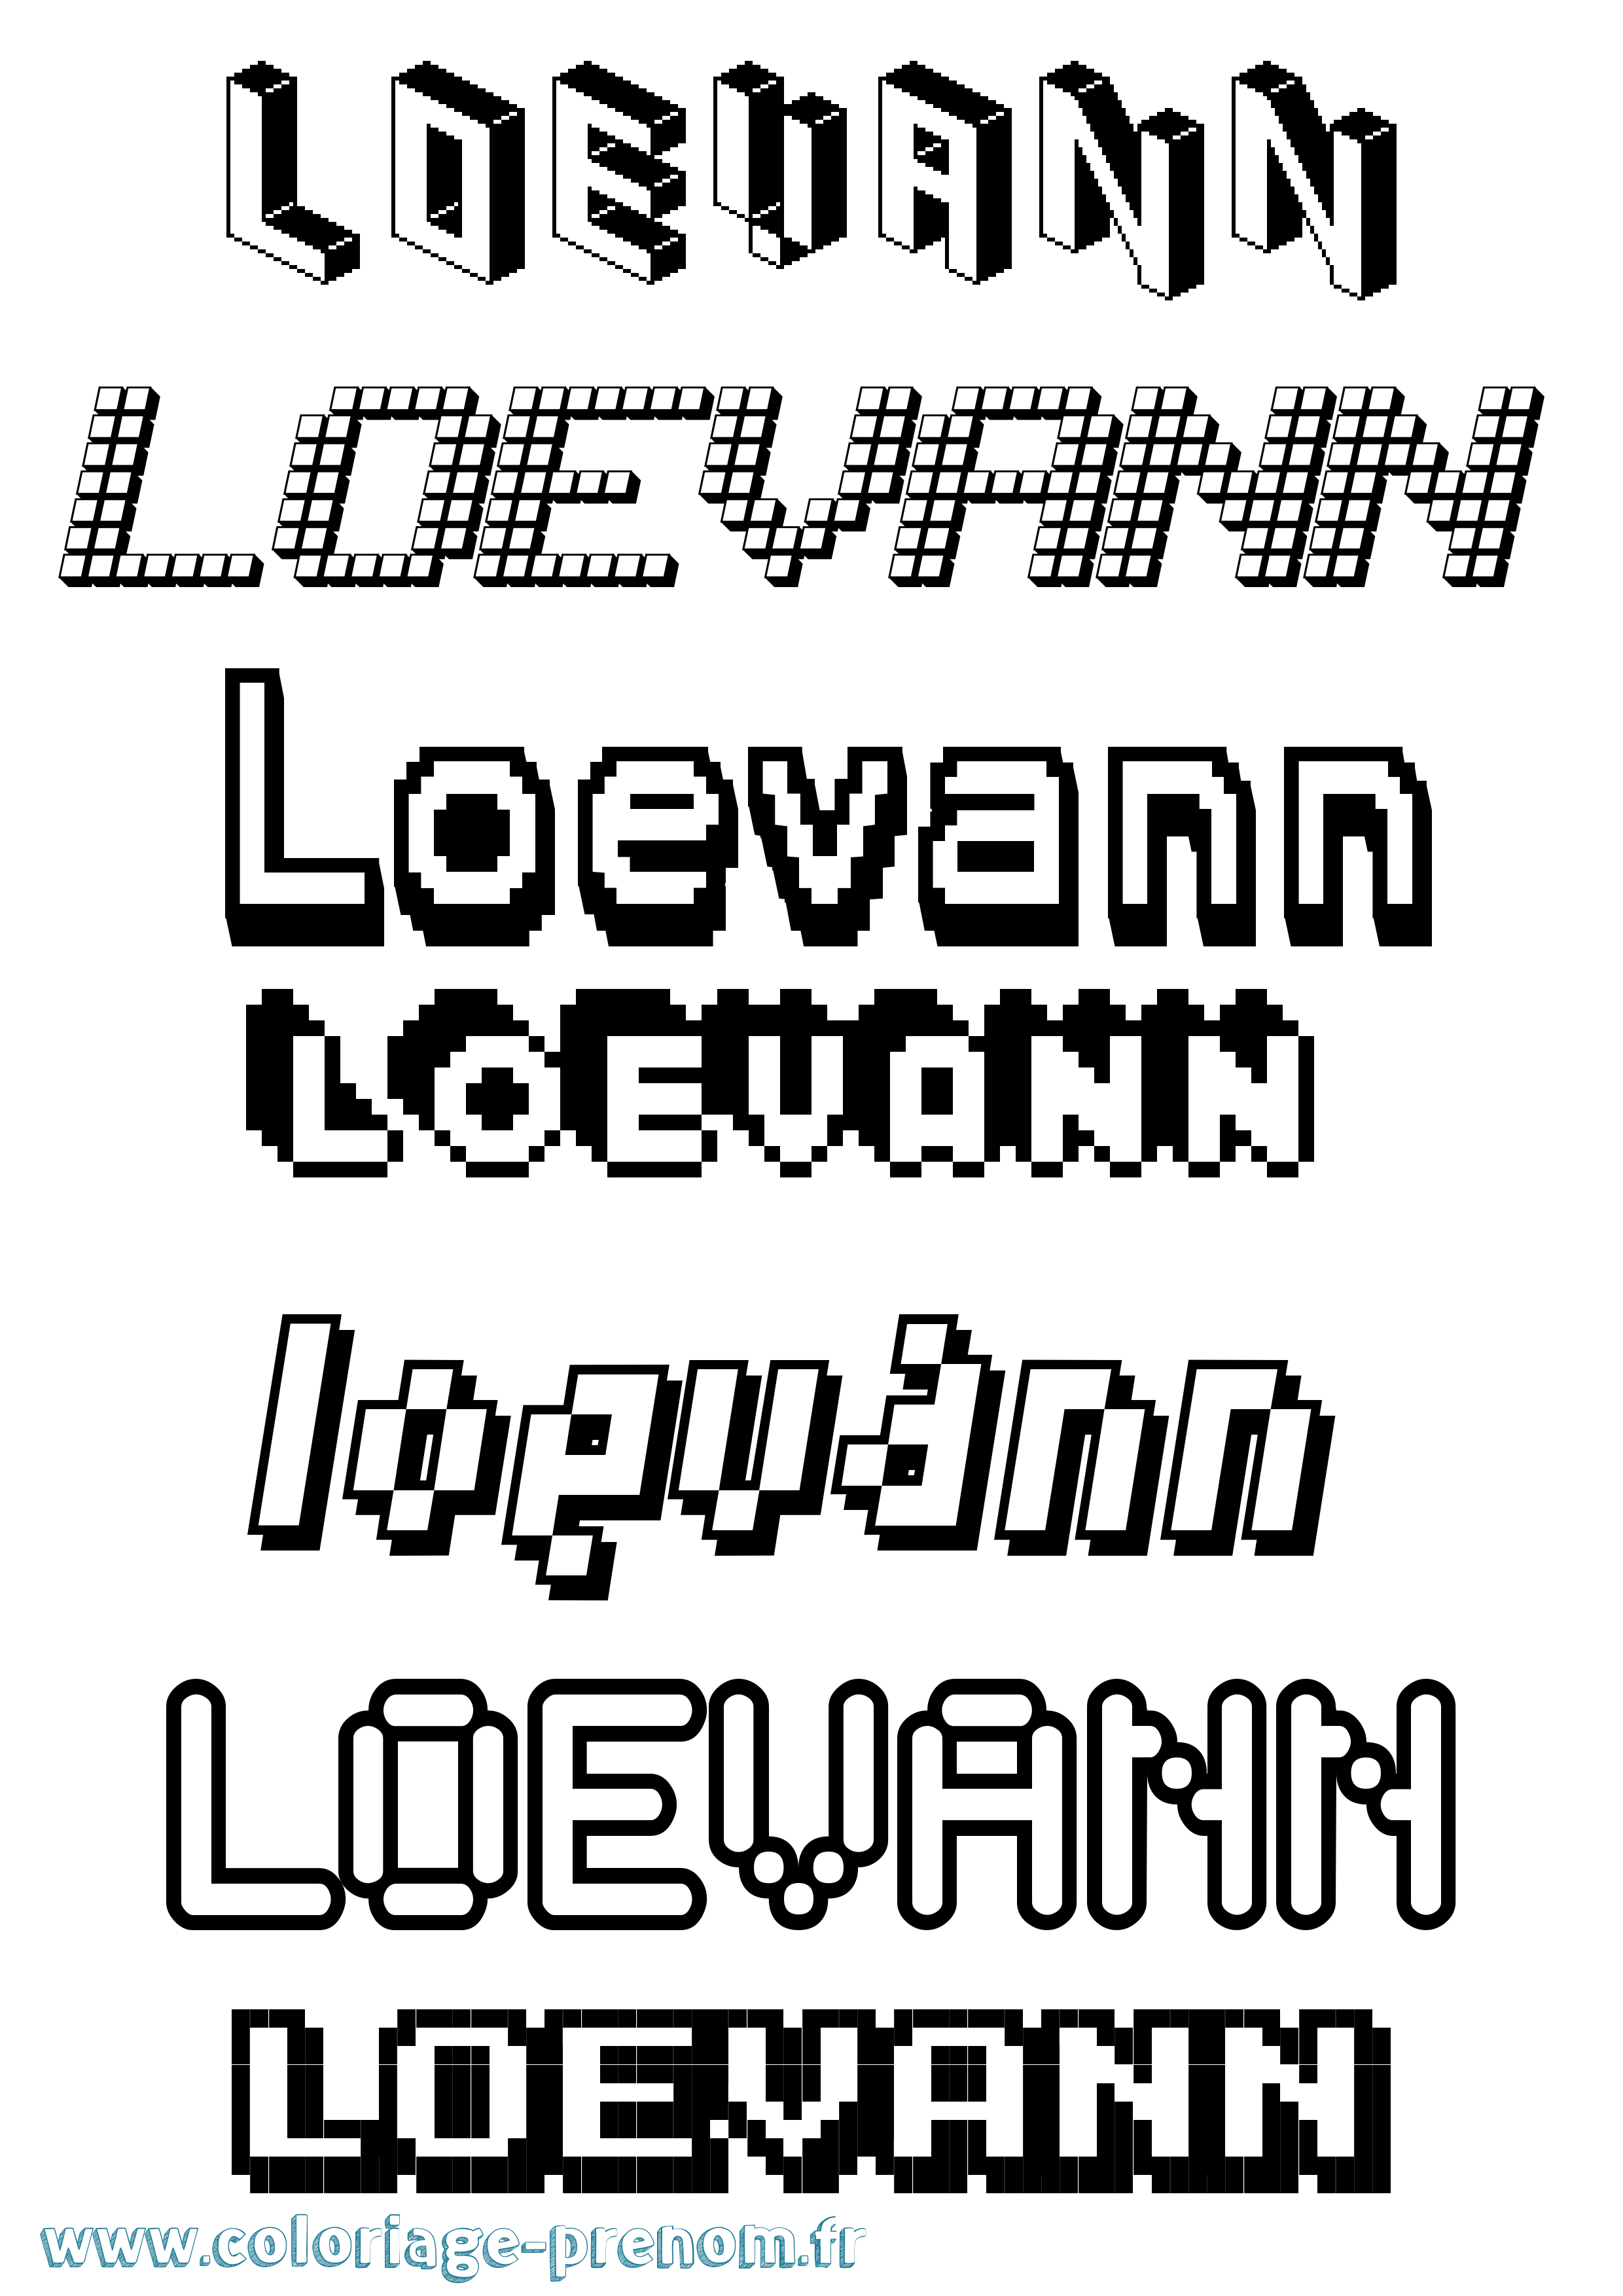 Coloriage prénom Loevann Pixel